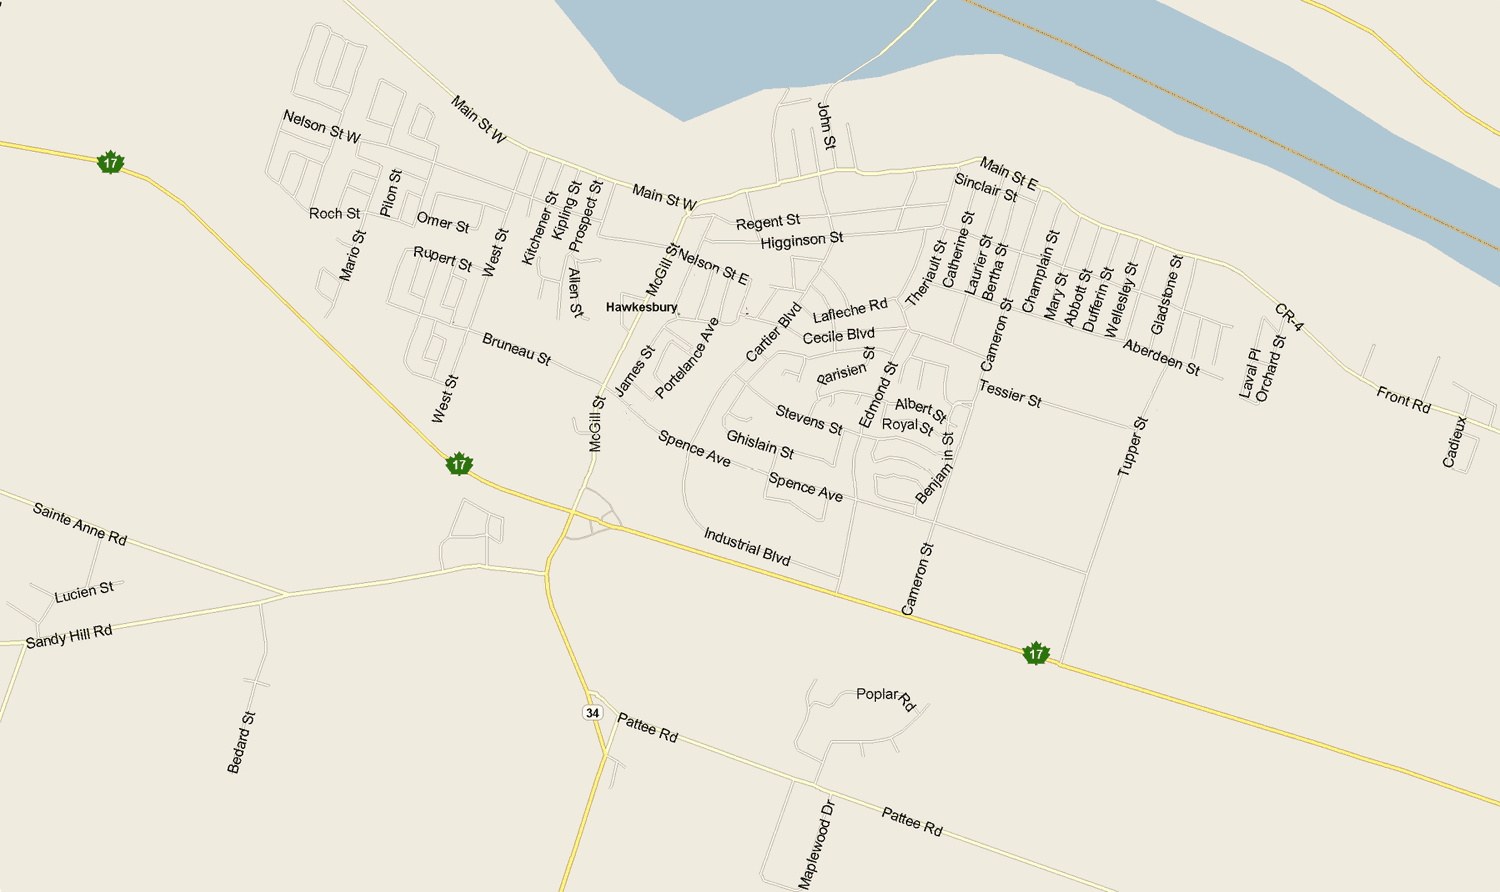 Map Of Hawkesbury Ontario